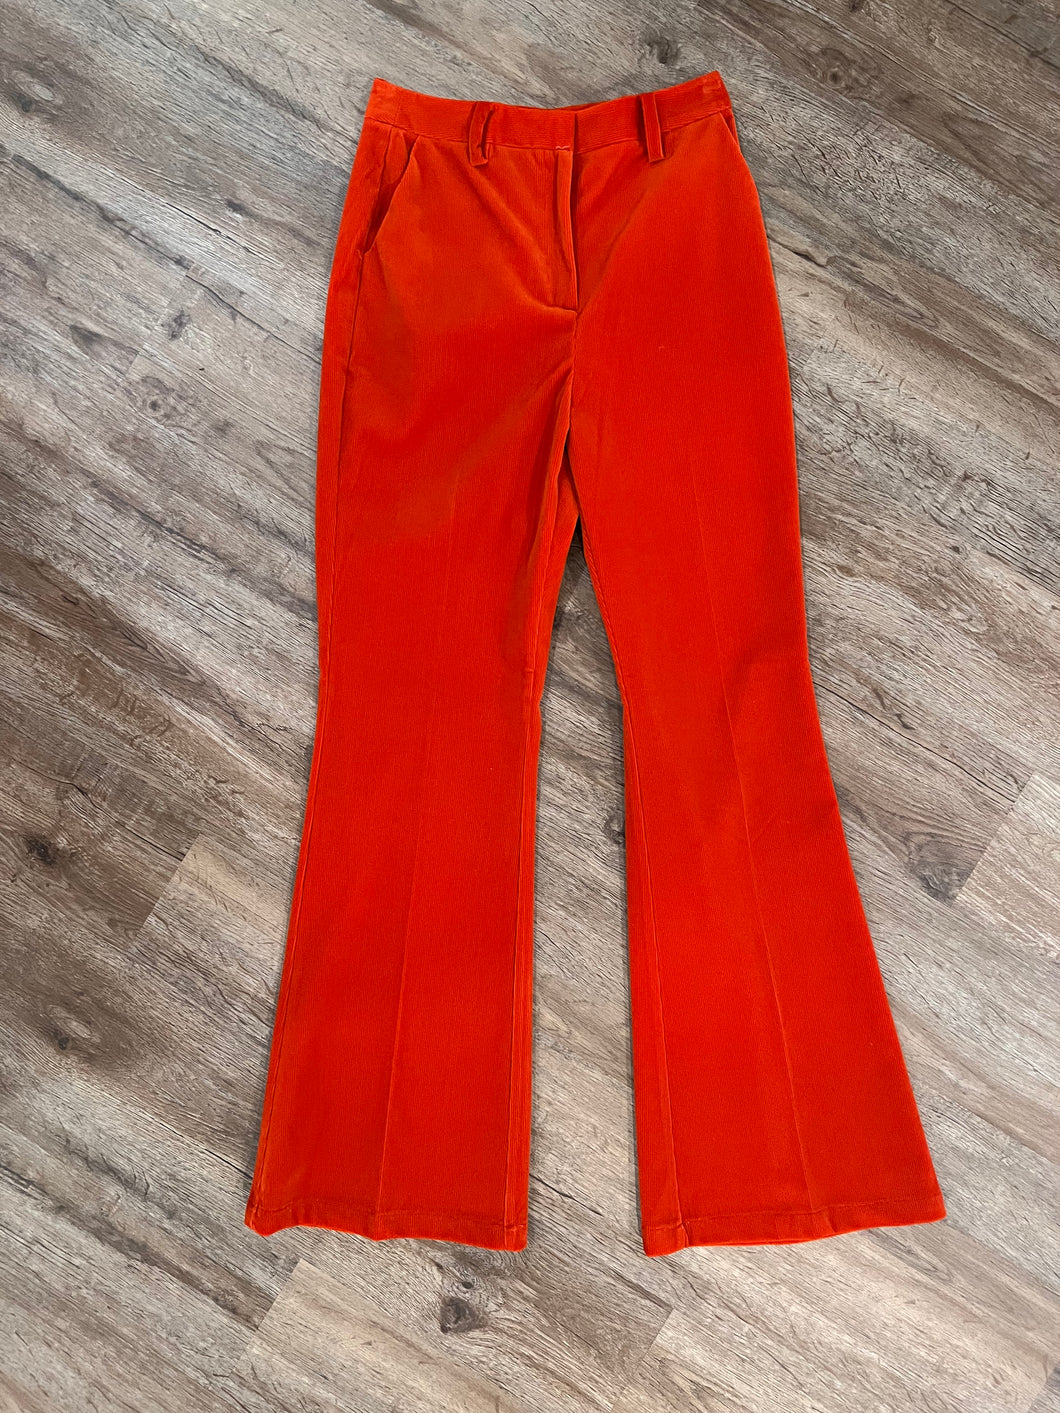 FRNCH Orange Pants